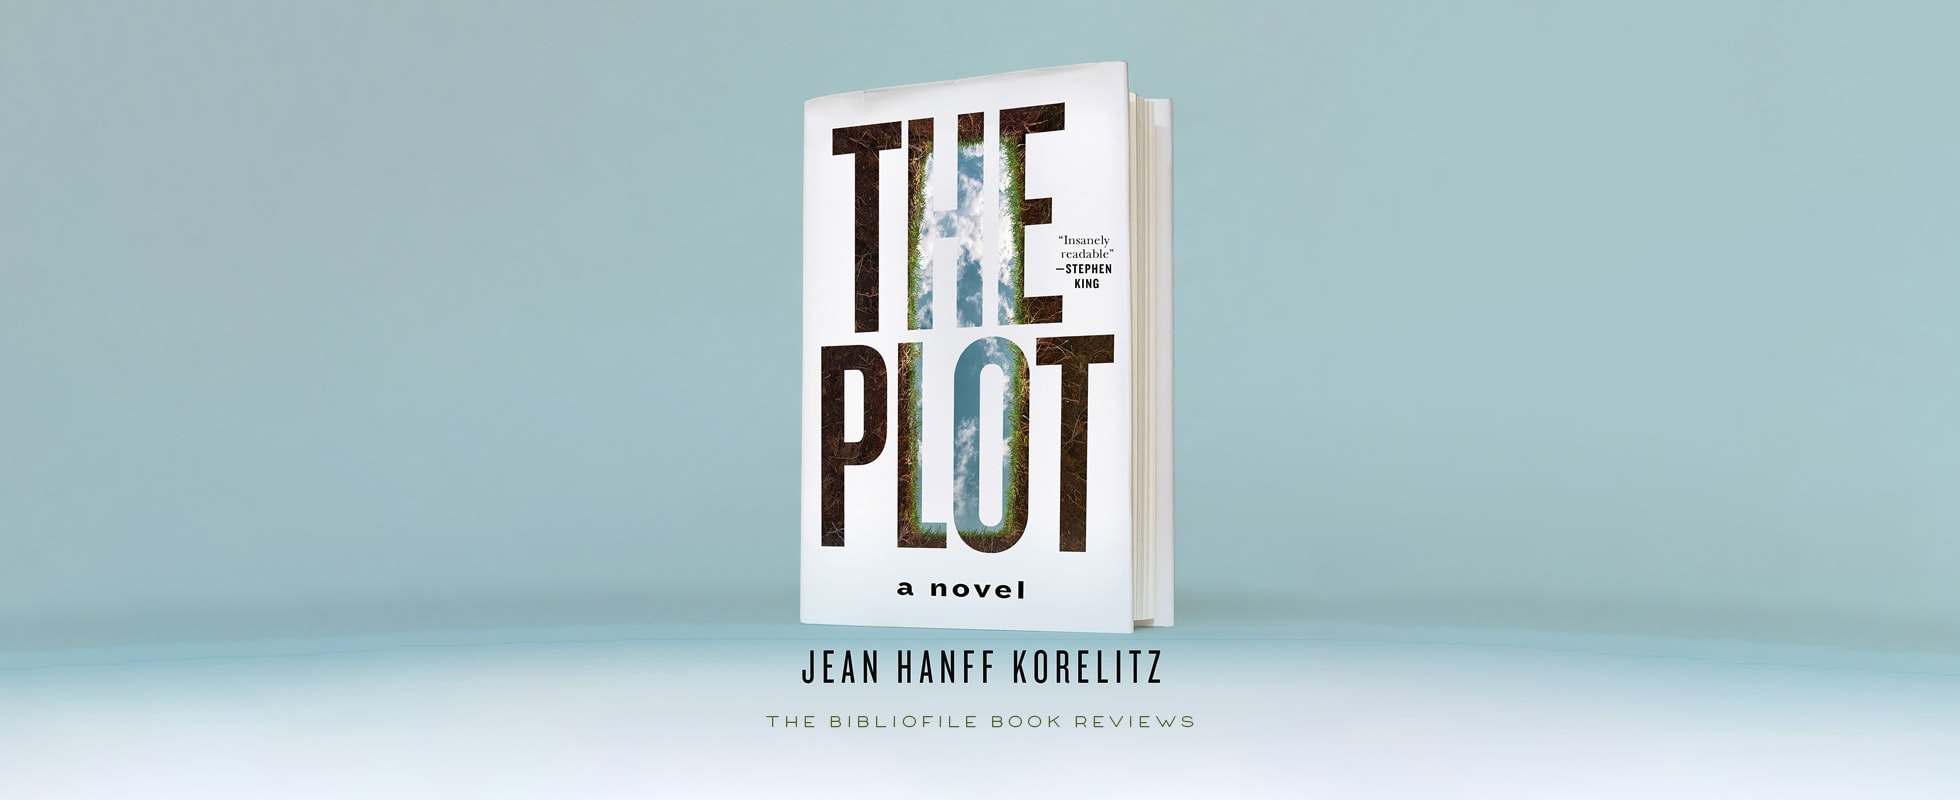 the plot by Jean Hanff Korelitz book review plot summary synopsis recap spoilers